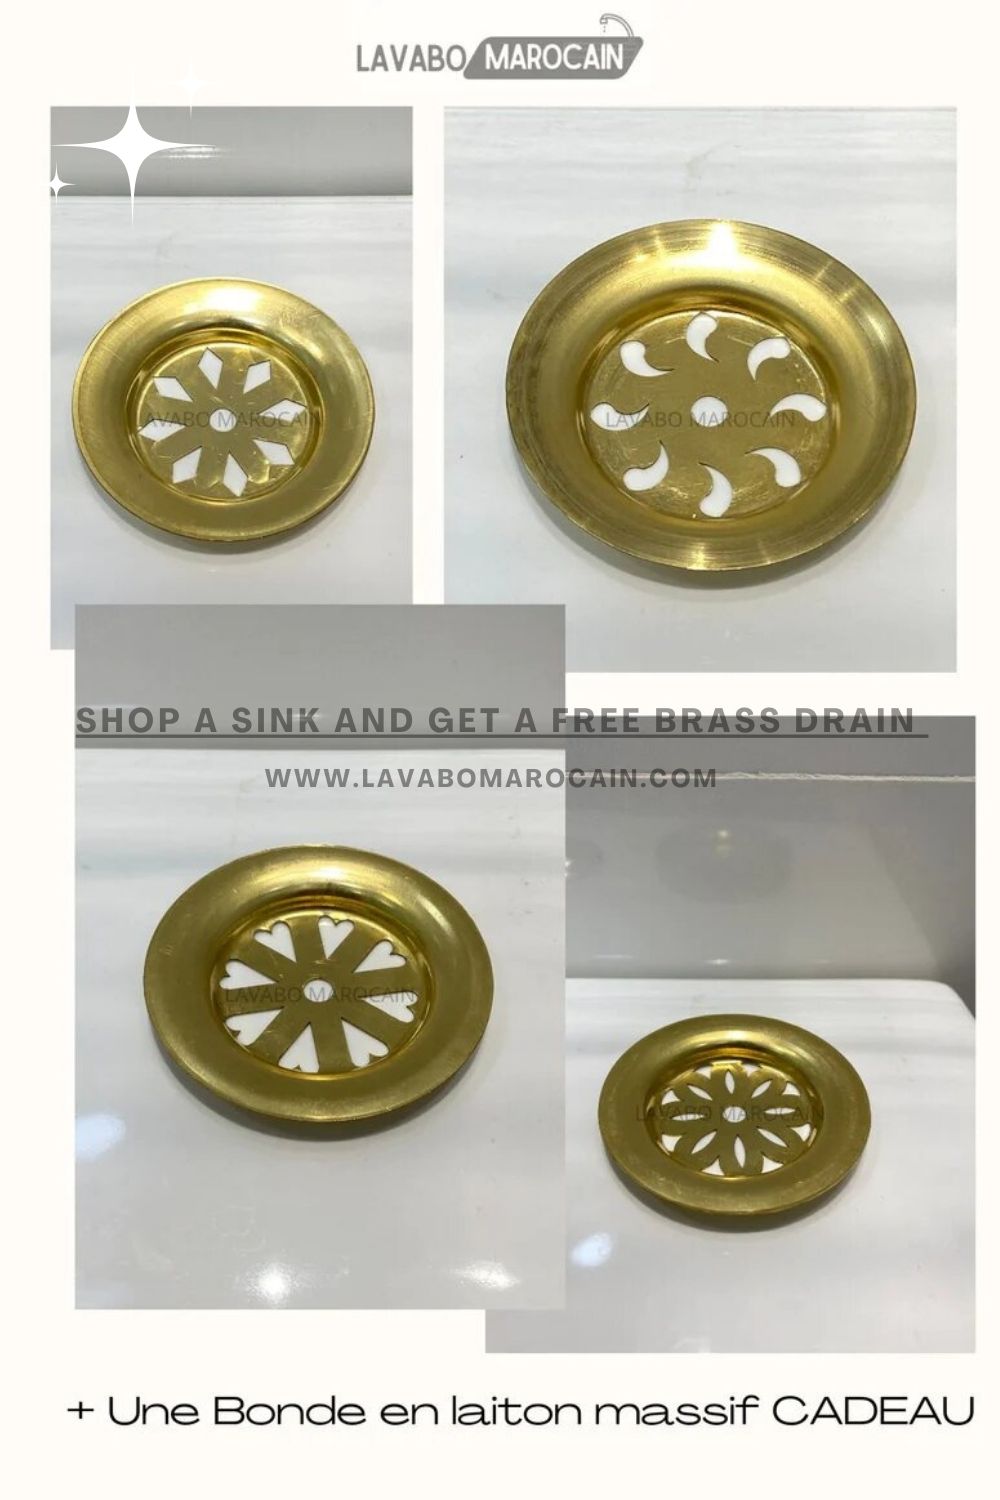 Moroccan sink 14k carats gold rim | Hand-painted ceramic sink | Mid century modern bathroom washbasin #20J